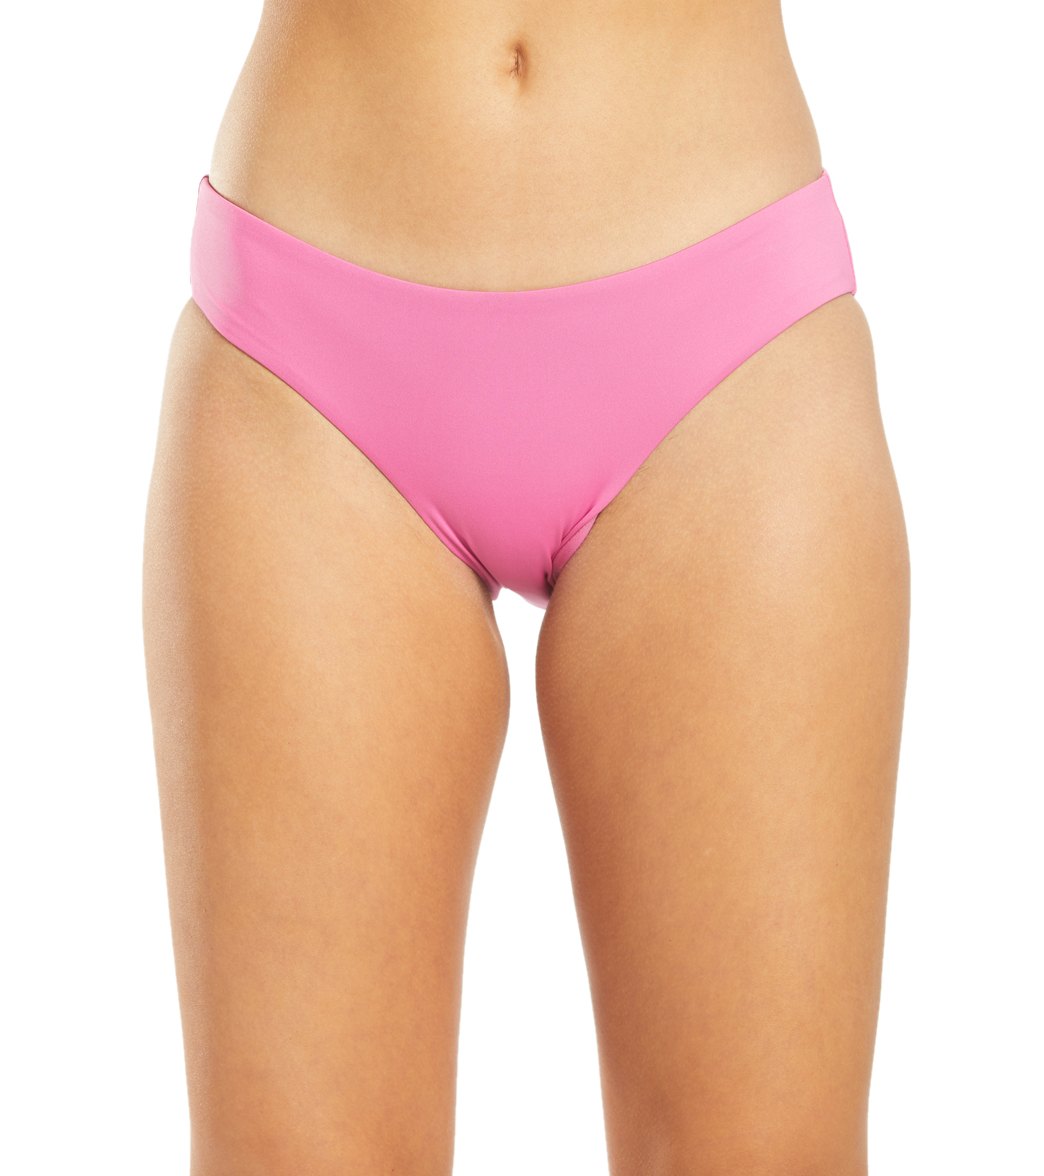 Nike Scoop Bikini Bottom - Cosmic Fuchsia Large - Swimoutlet.com